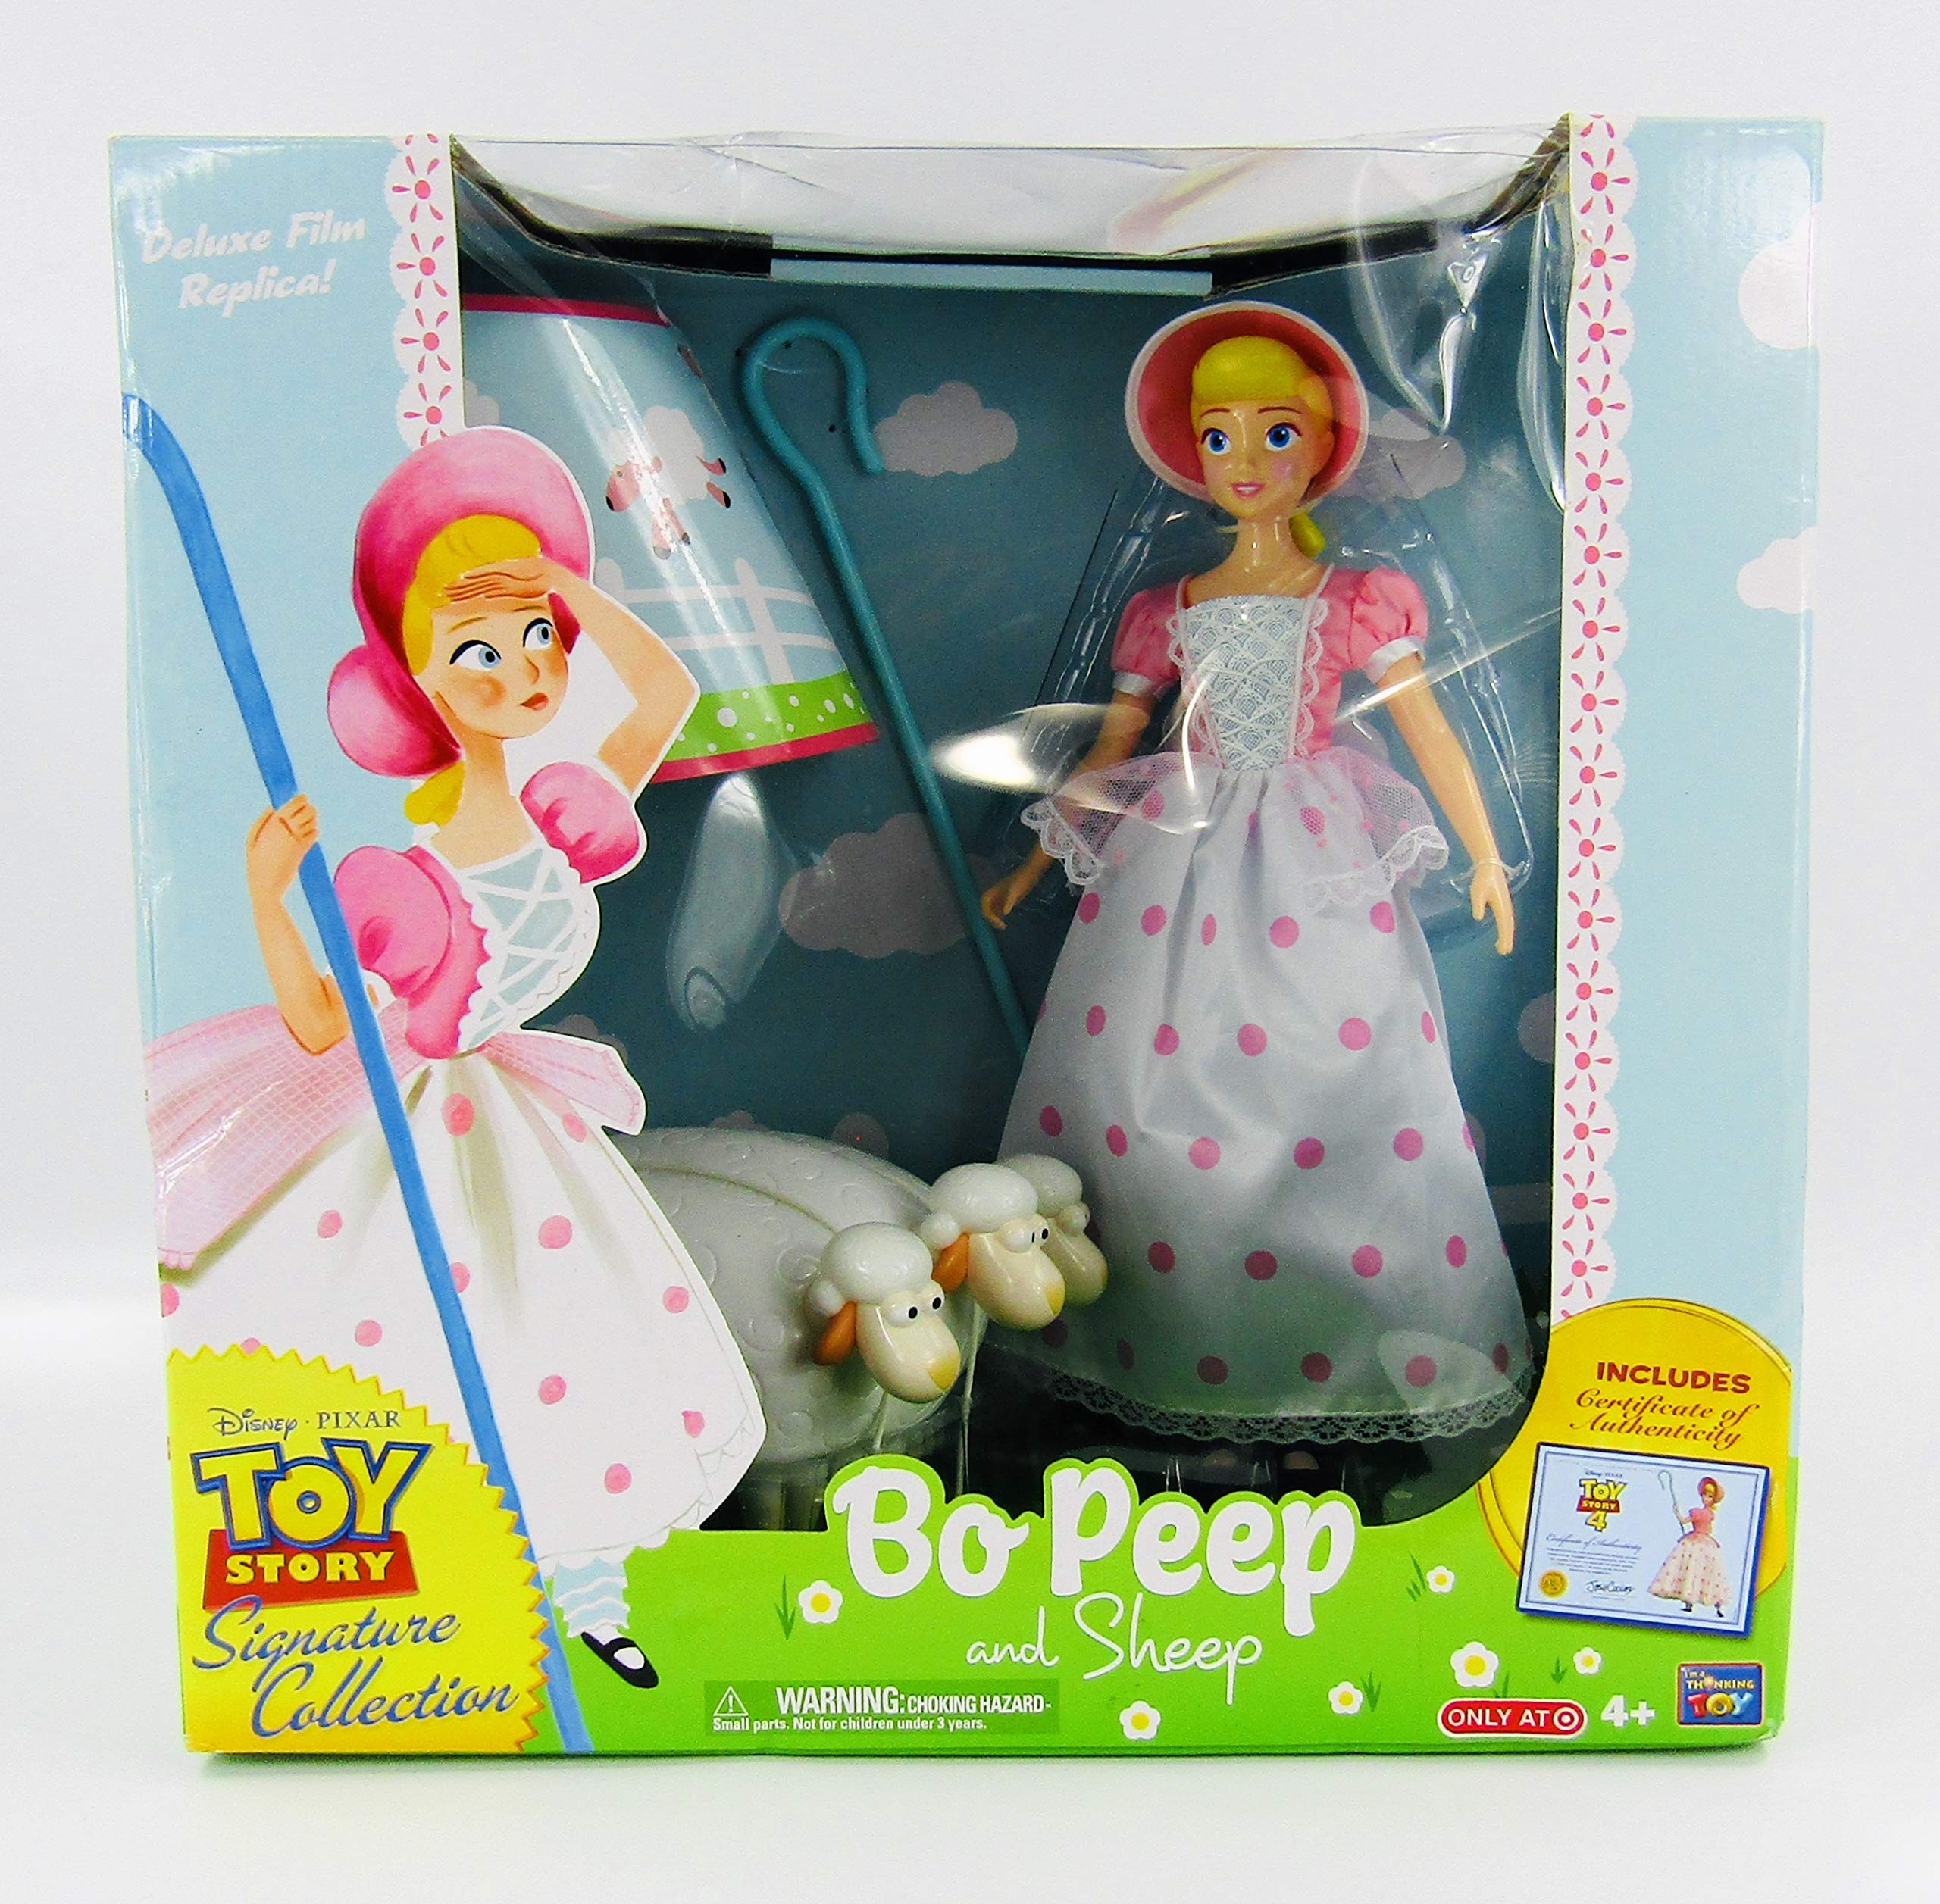 download toy story 1 bo peep